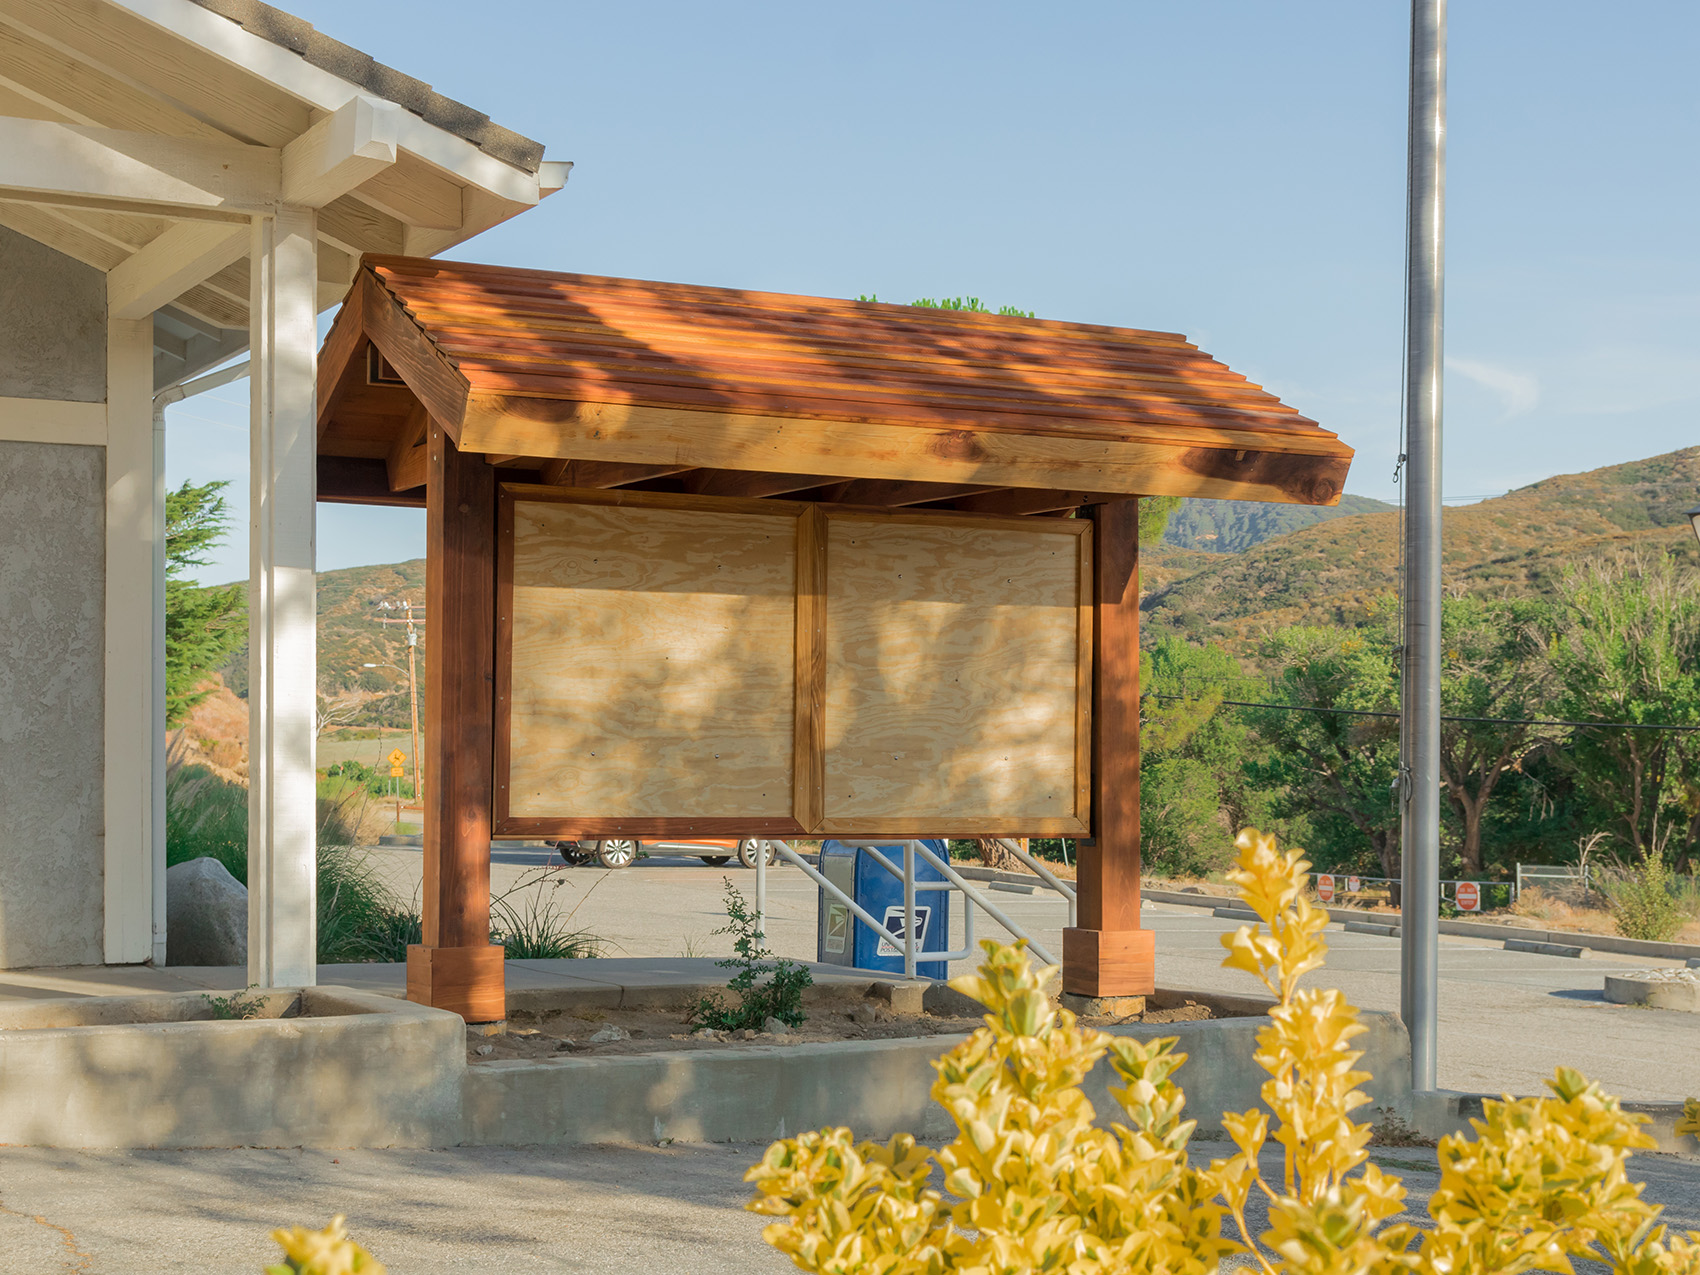 outdoor wooden kiosk